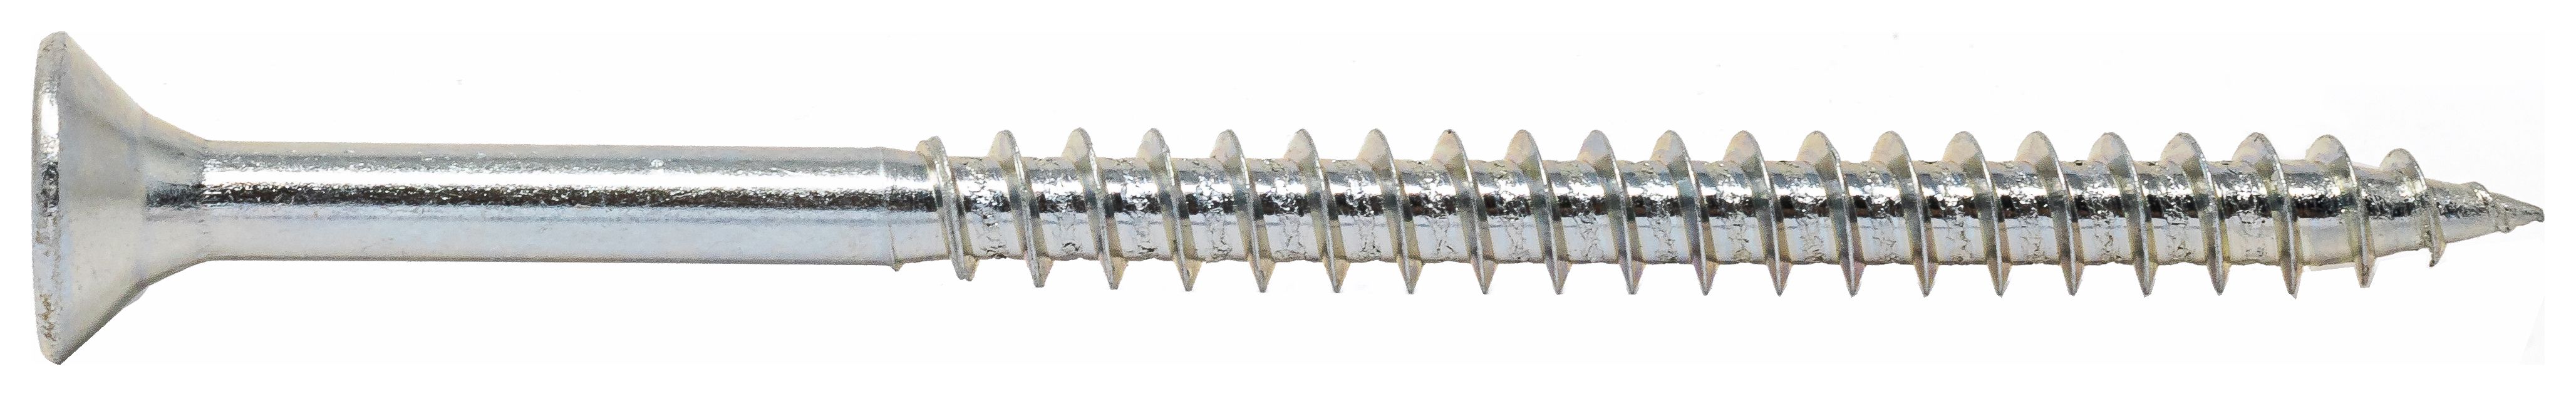 Wickes Single Thread Zinc Plated Screw - 4 X 40mm Pack Of 200